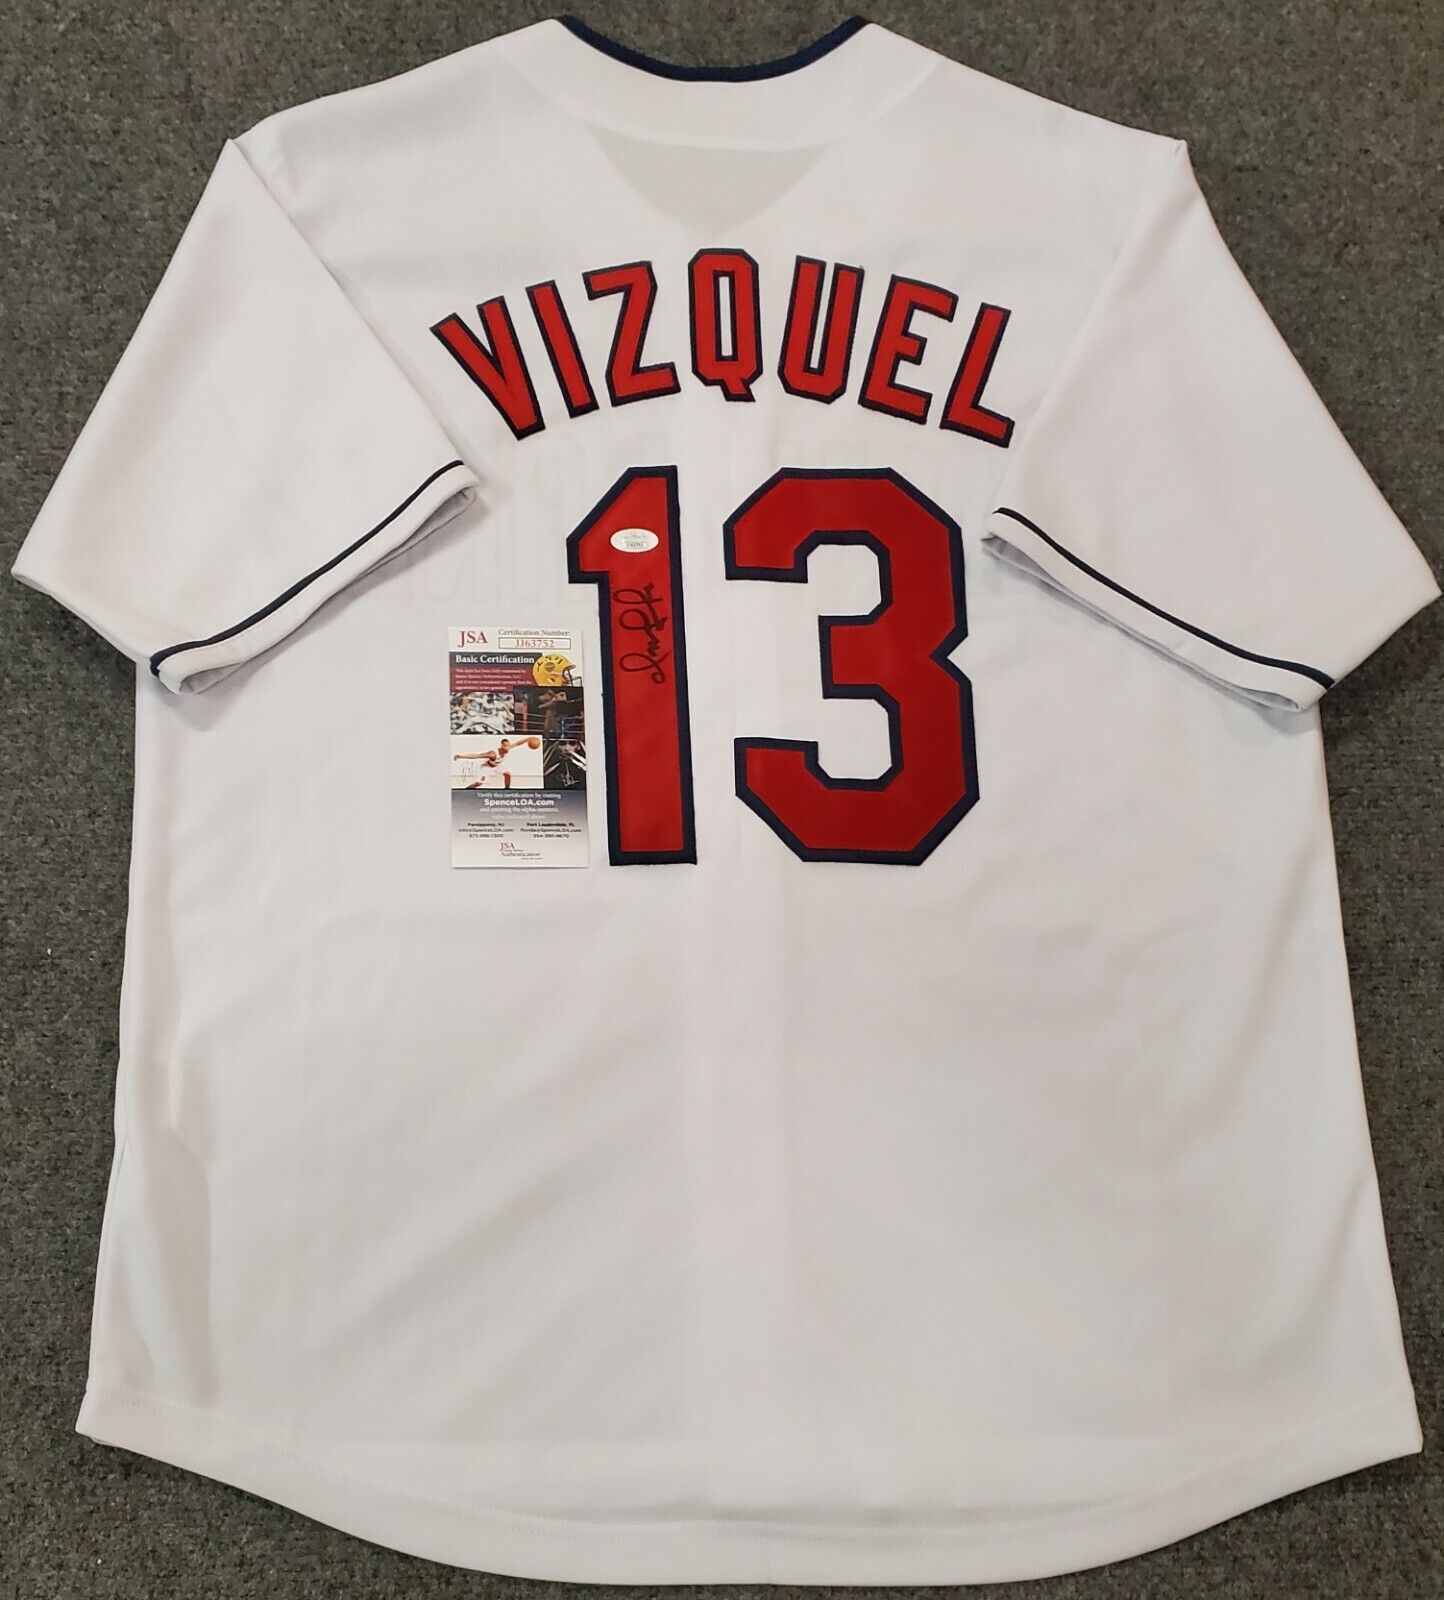 Omar Vizquel autographed signed jersey Cleveland Indians JSA COA